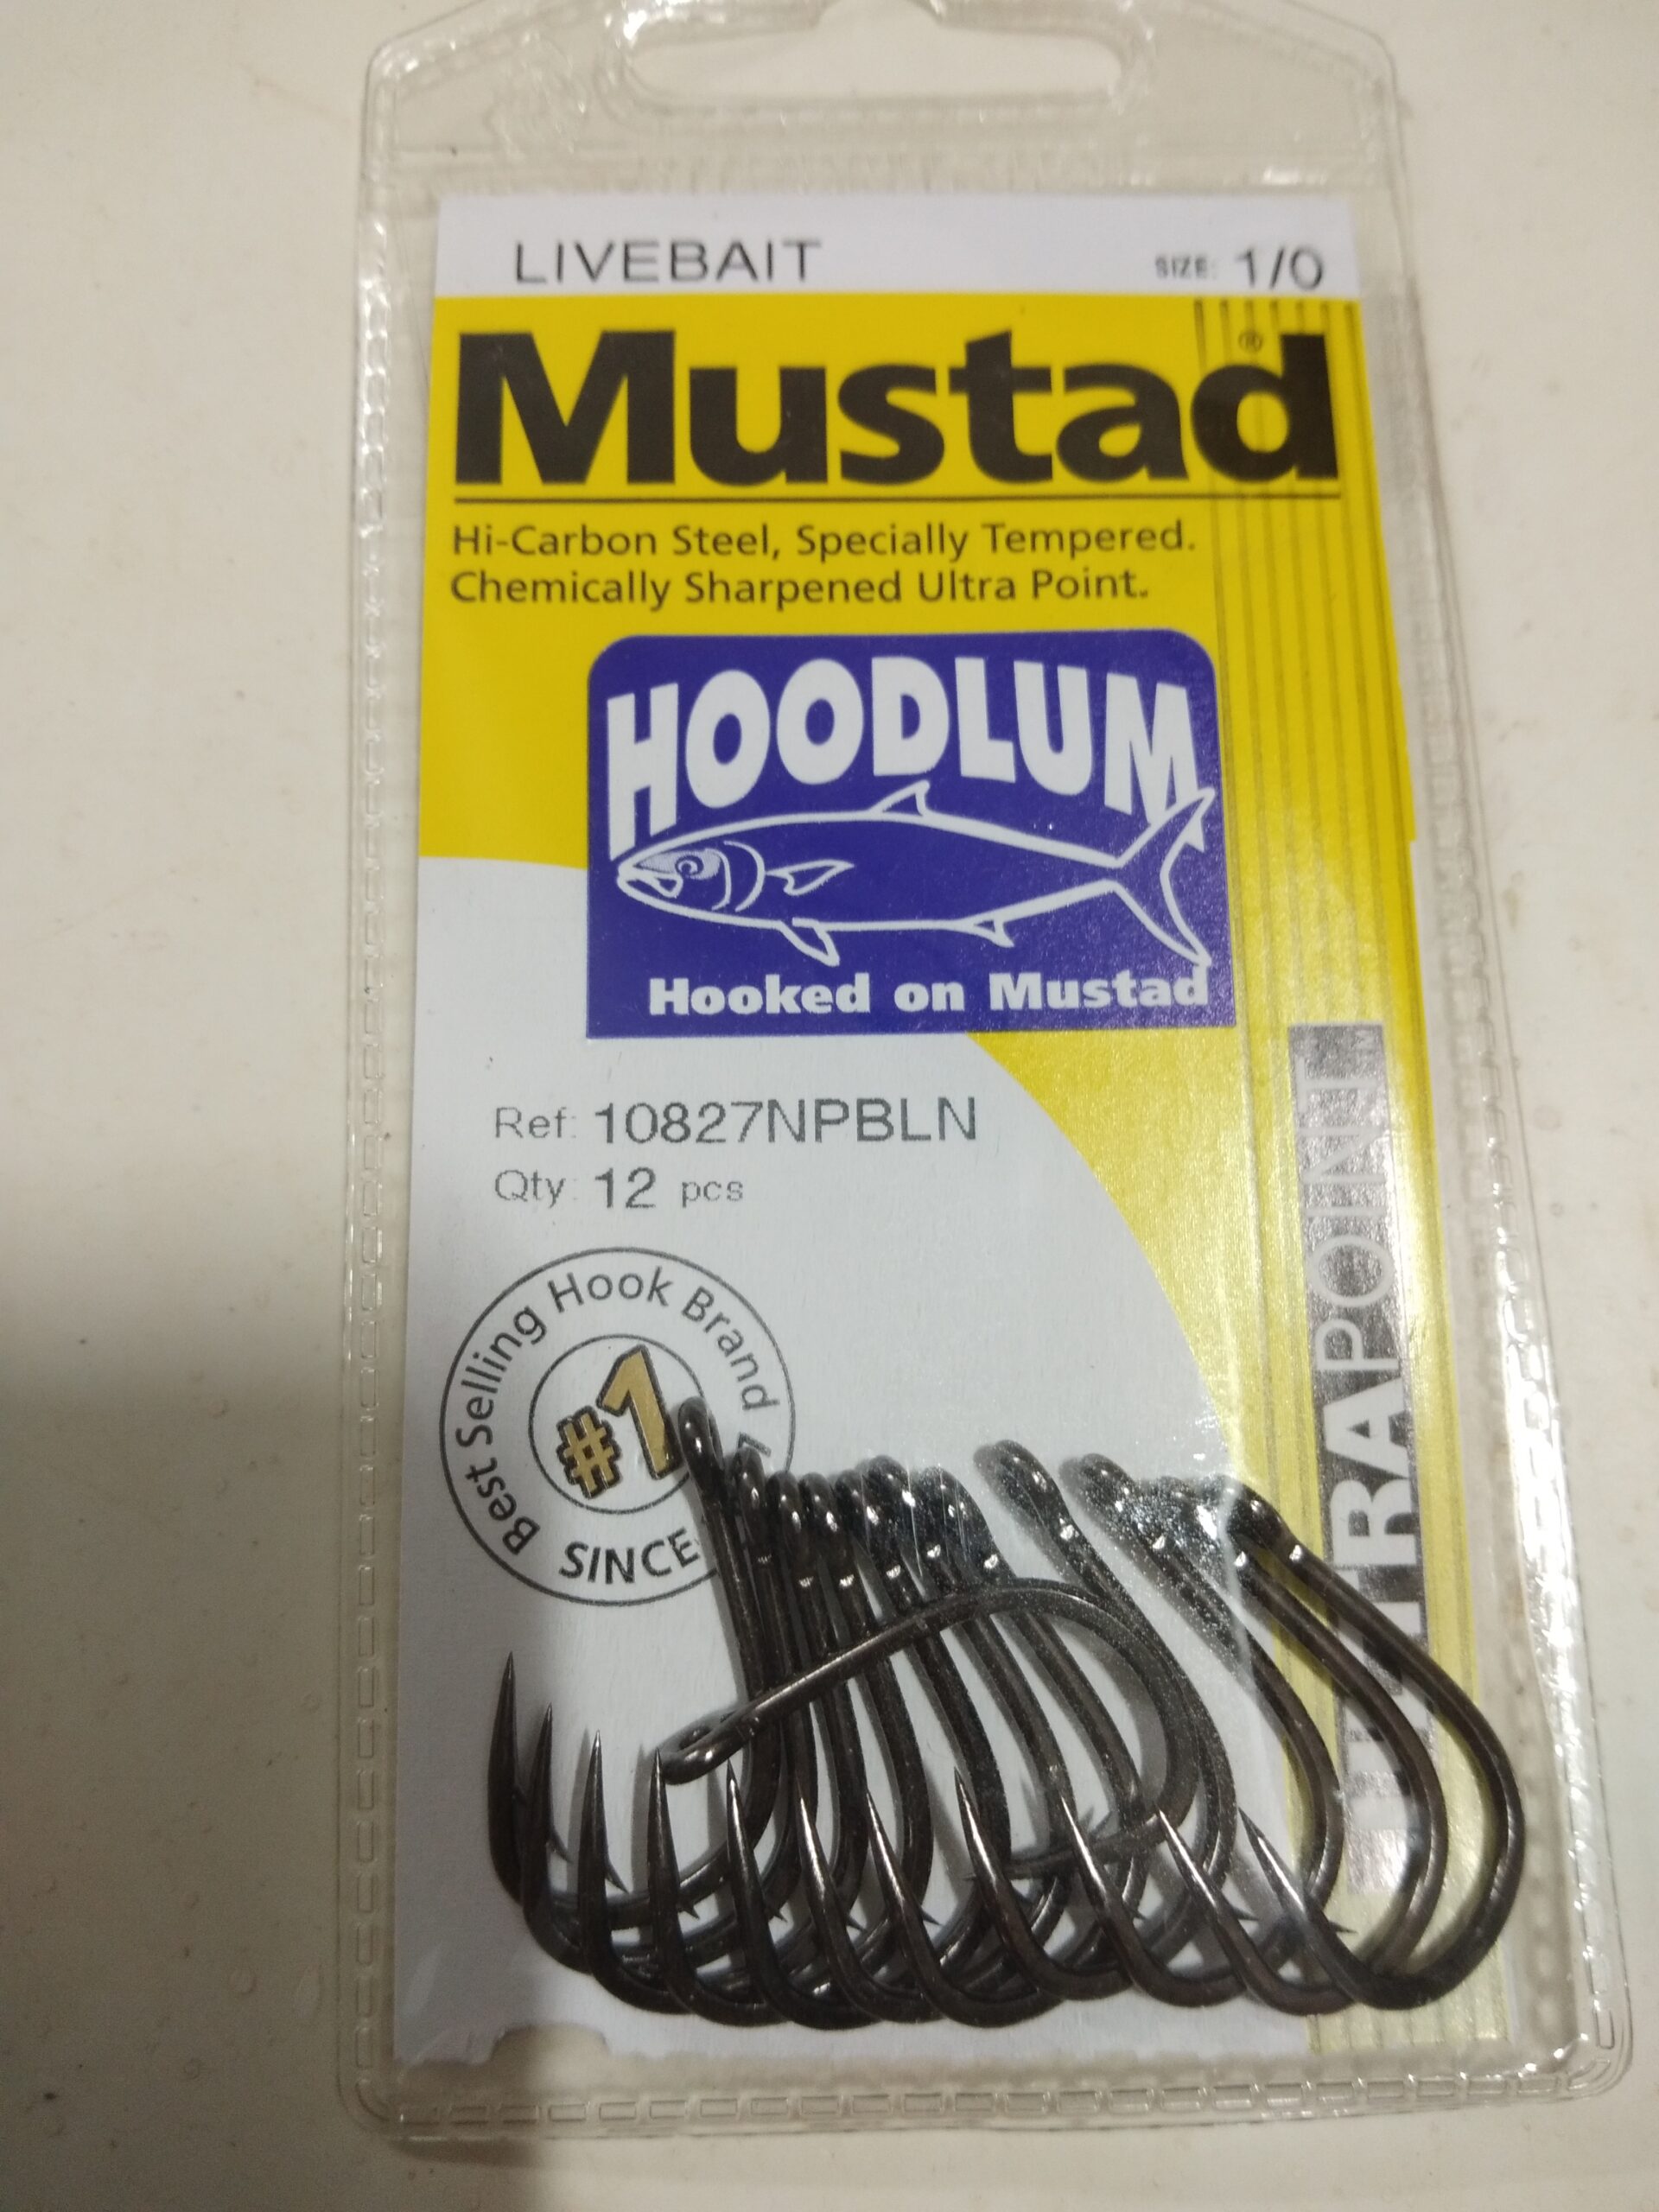 Livebait Mustad Hoodlum Hooks – First Catch